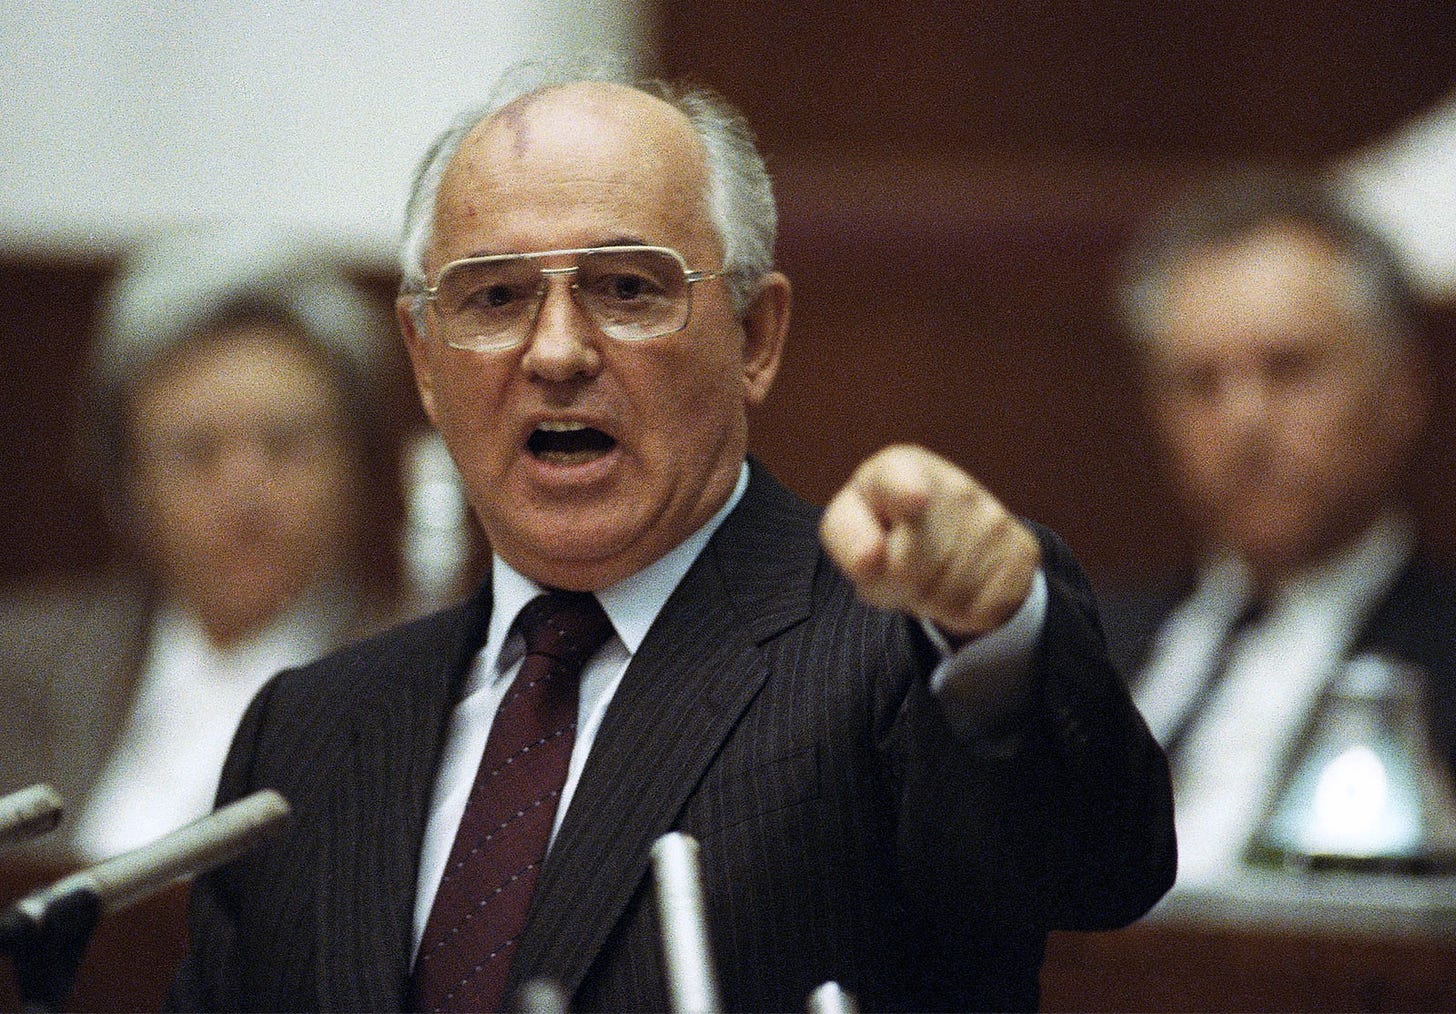 https://cdn.britannica.com/71/194471-050-06A60E75/Mikhail-Gorbachev-1991.jpg